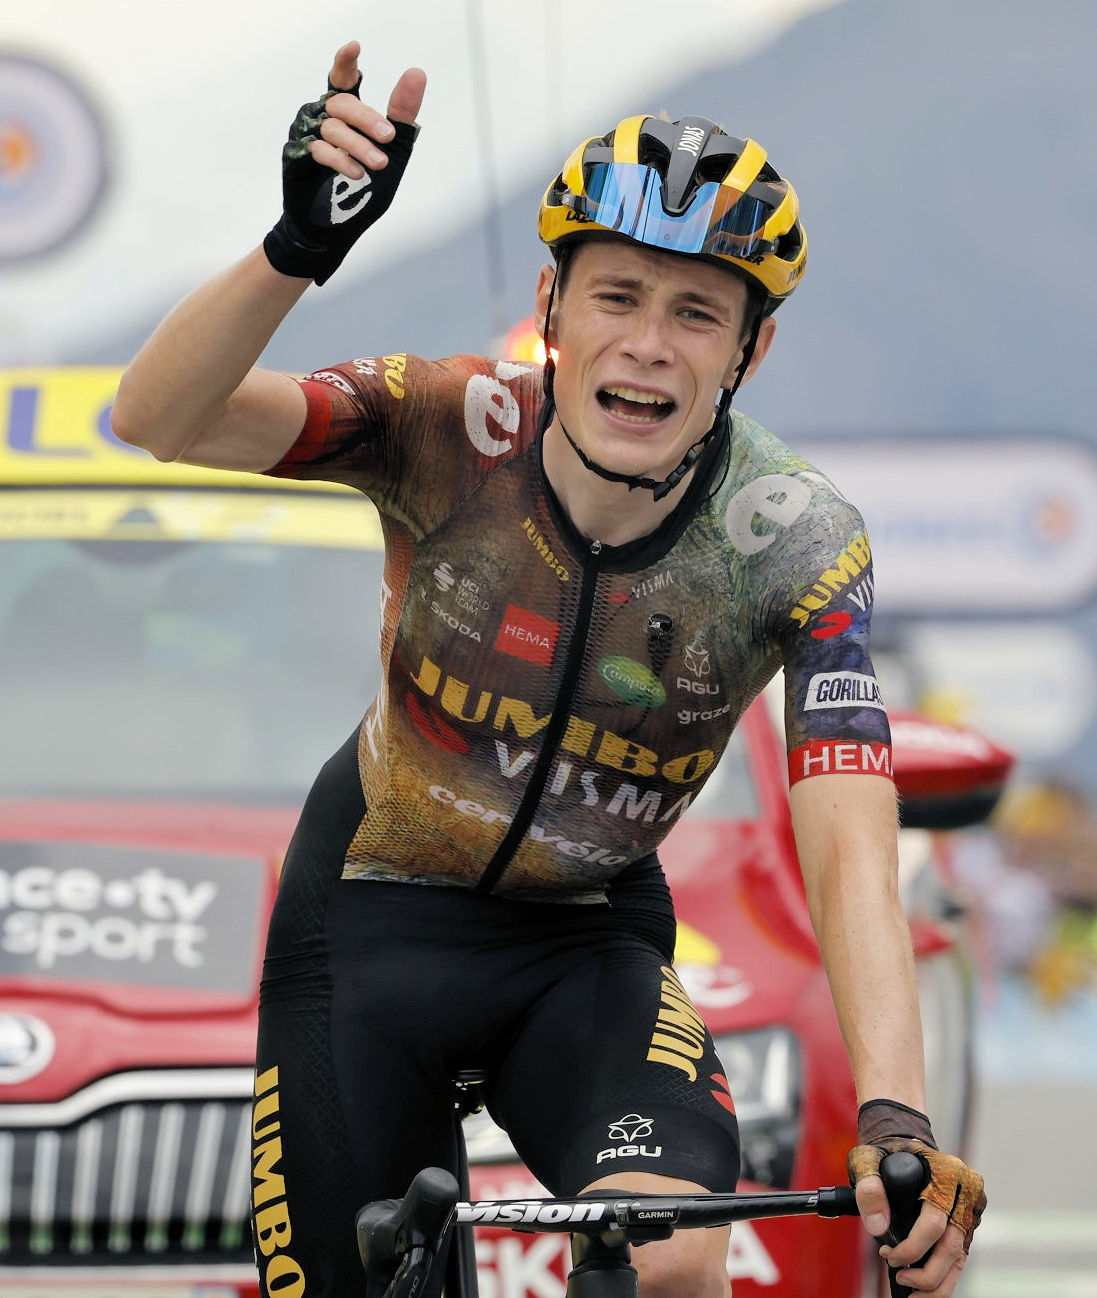 Tour de France 2022: Vingegaard wins on Col du Granon to take yellow